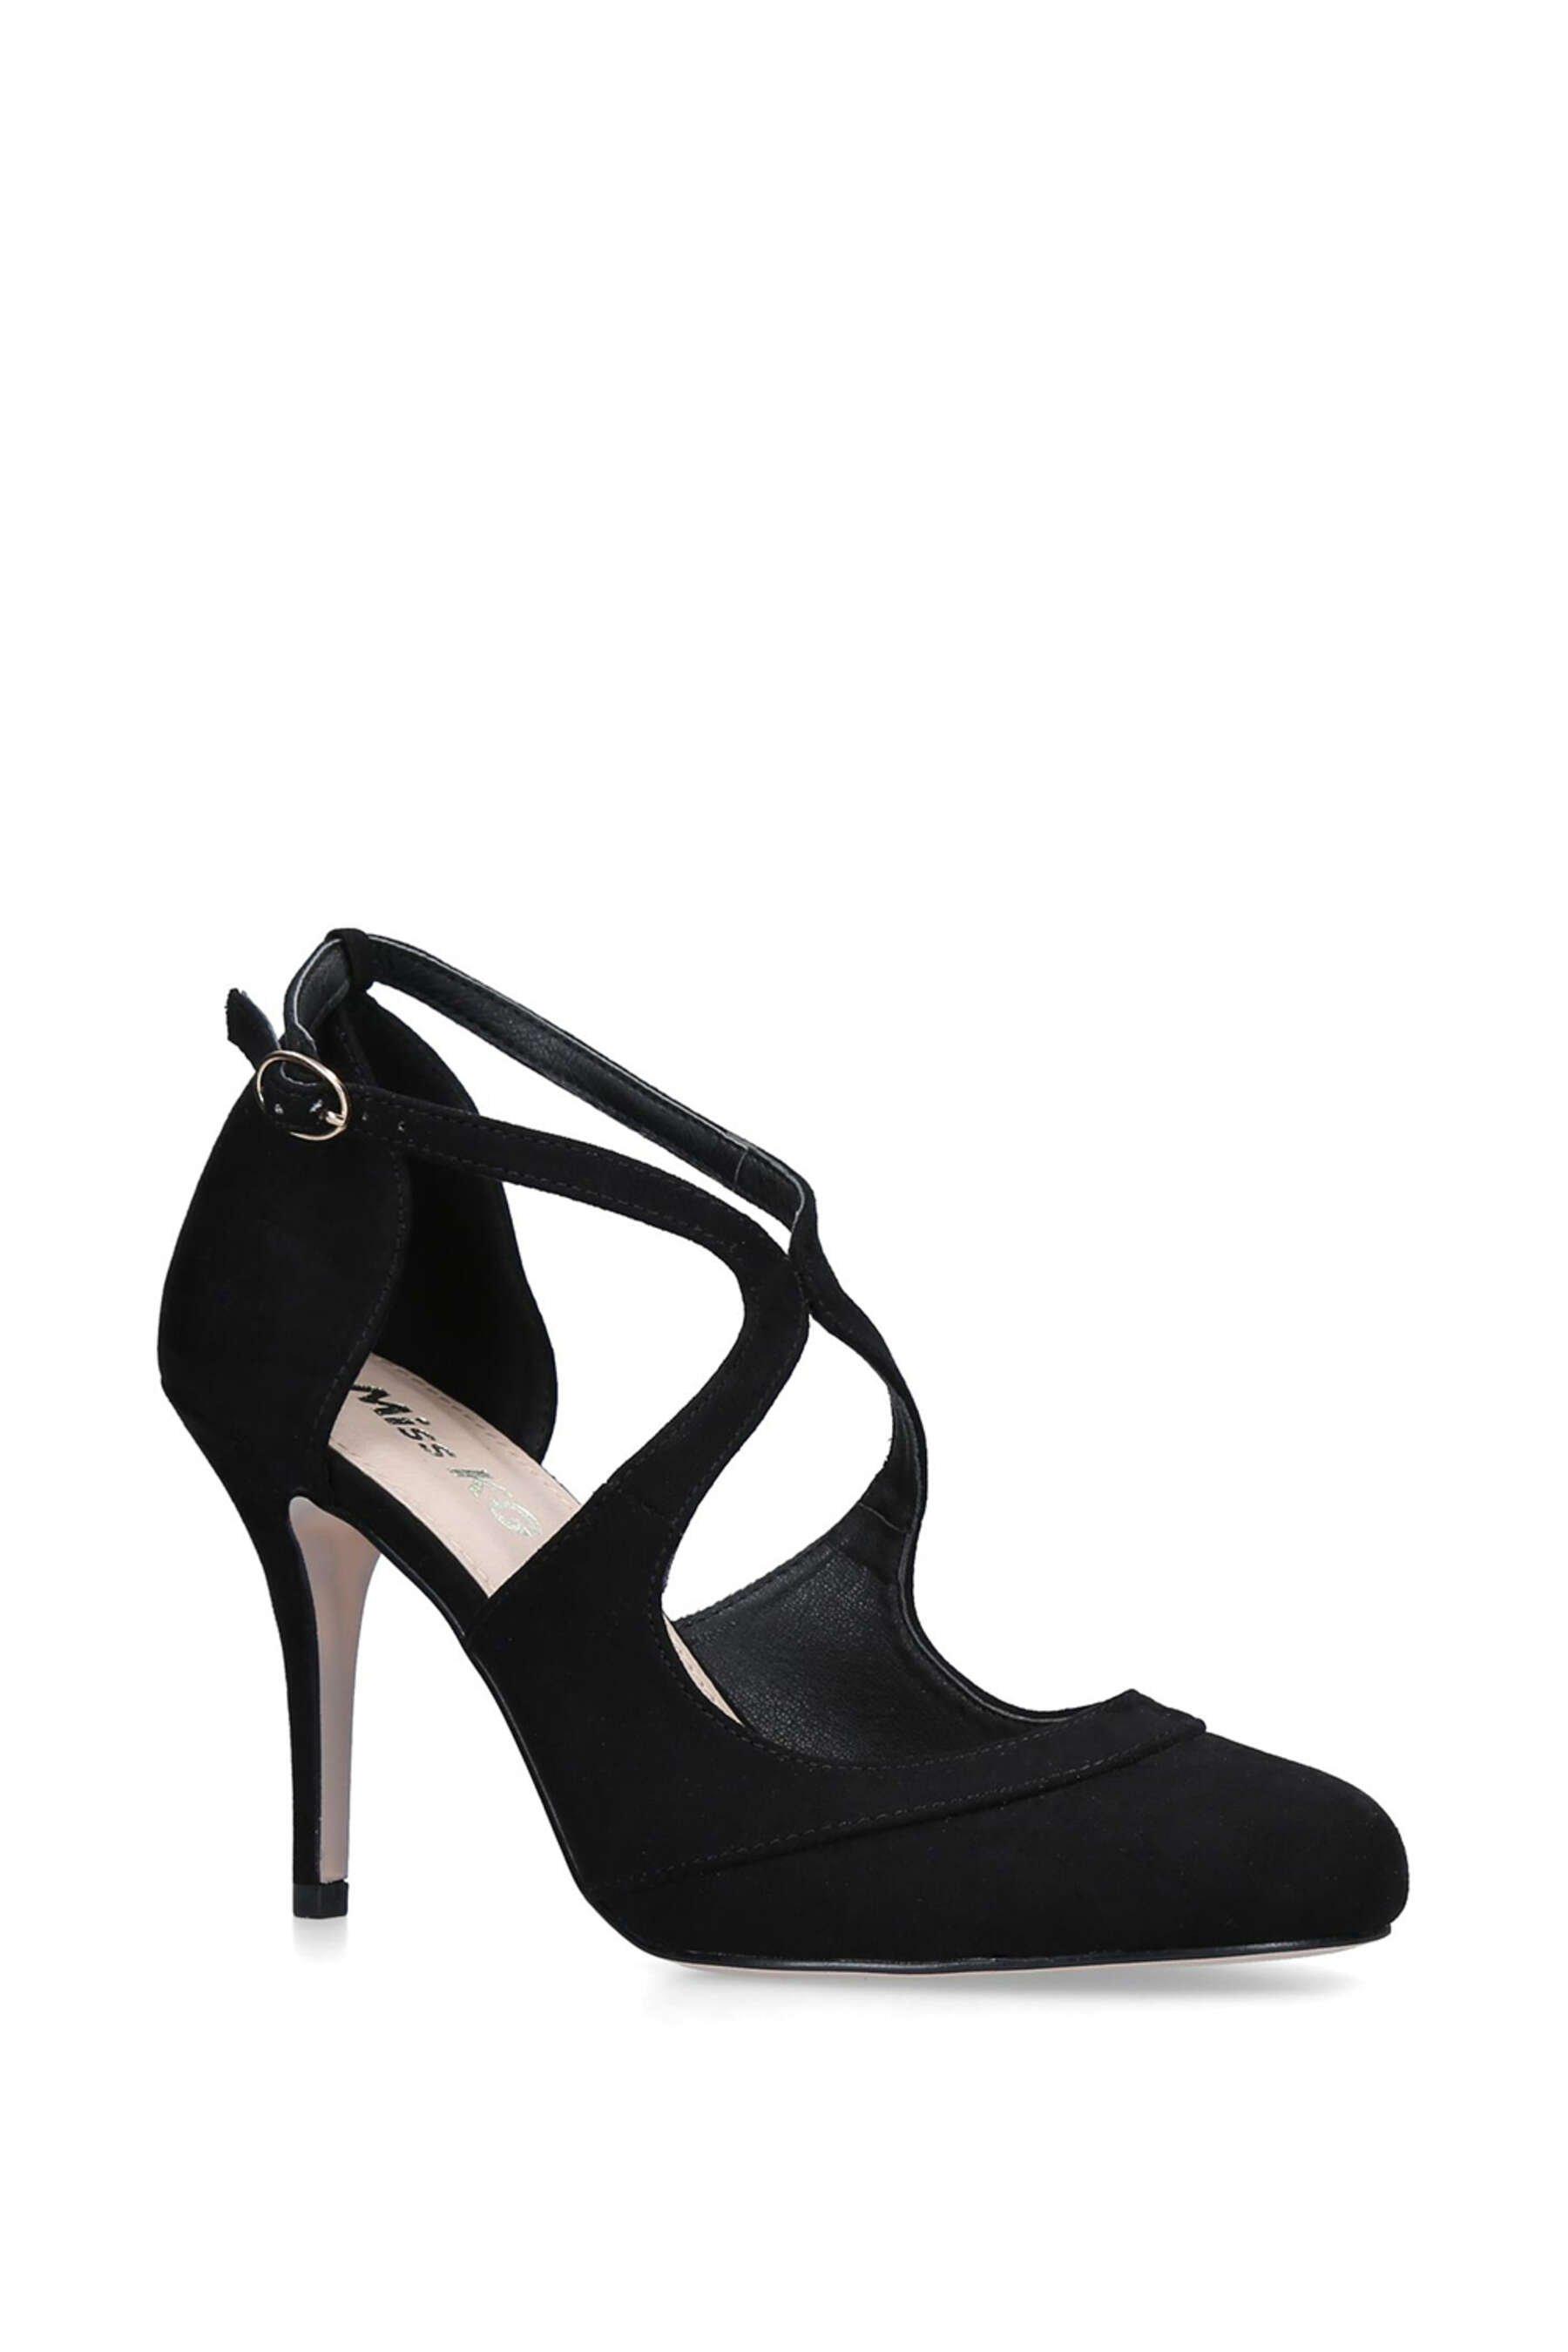 Miss KG Cayleb - Metallic Stiletto Heel Court Shoes | Compare | One New  Change